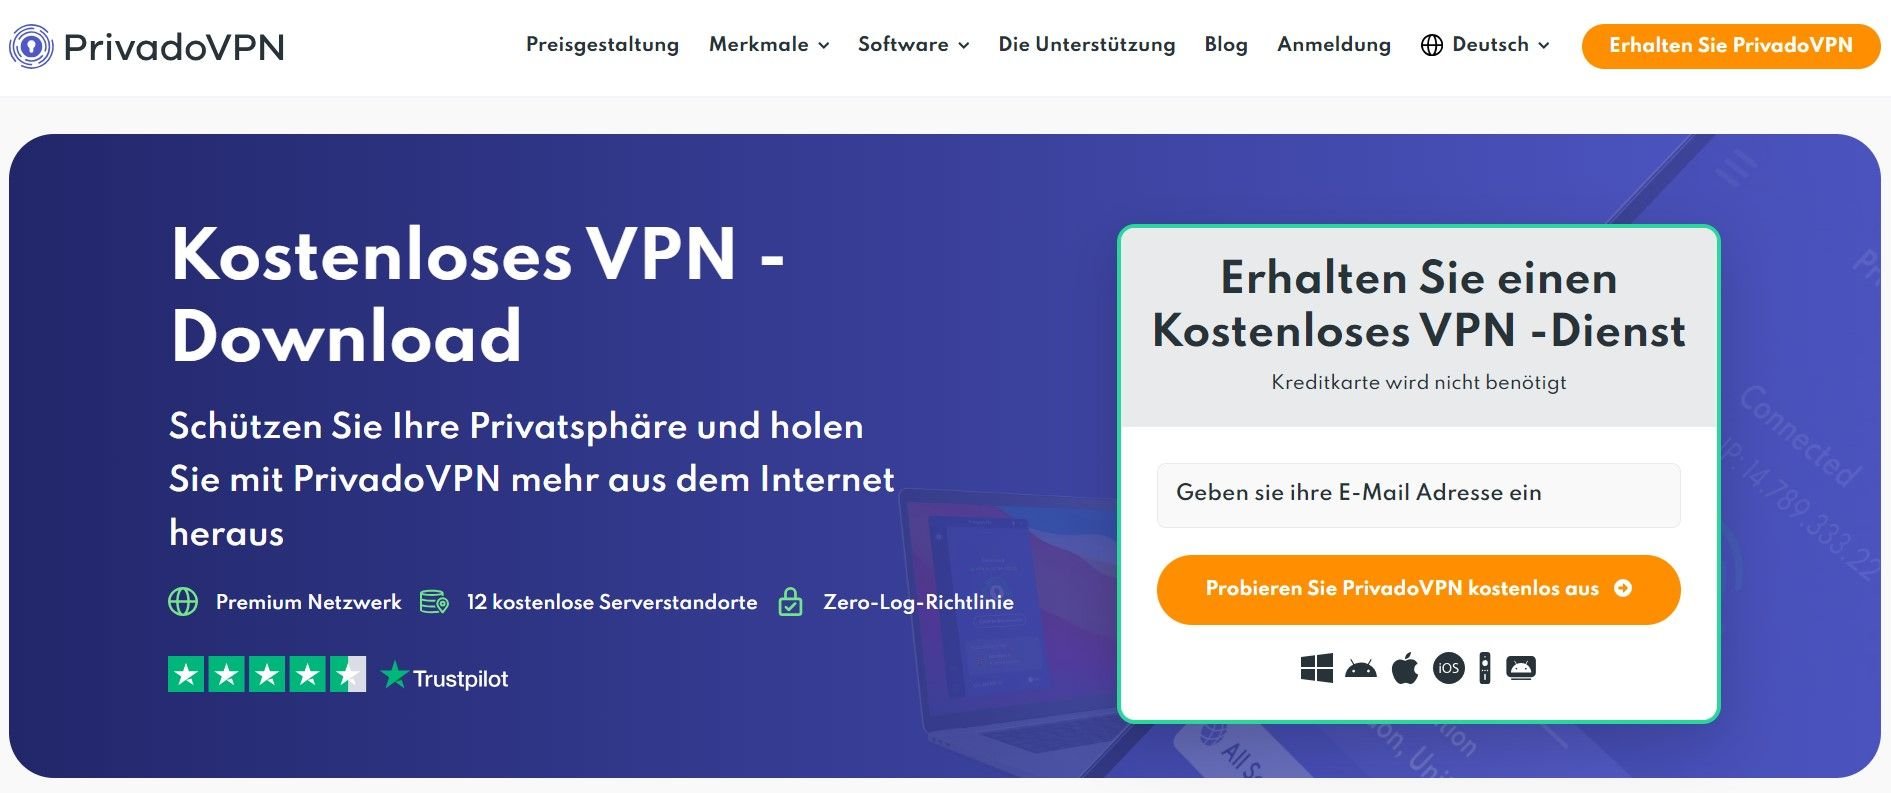 PrivadoVPN bestes kostenloses VPN Italien gratis